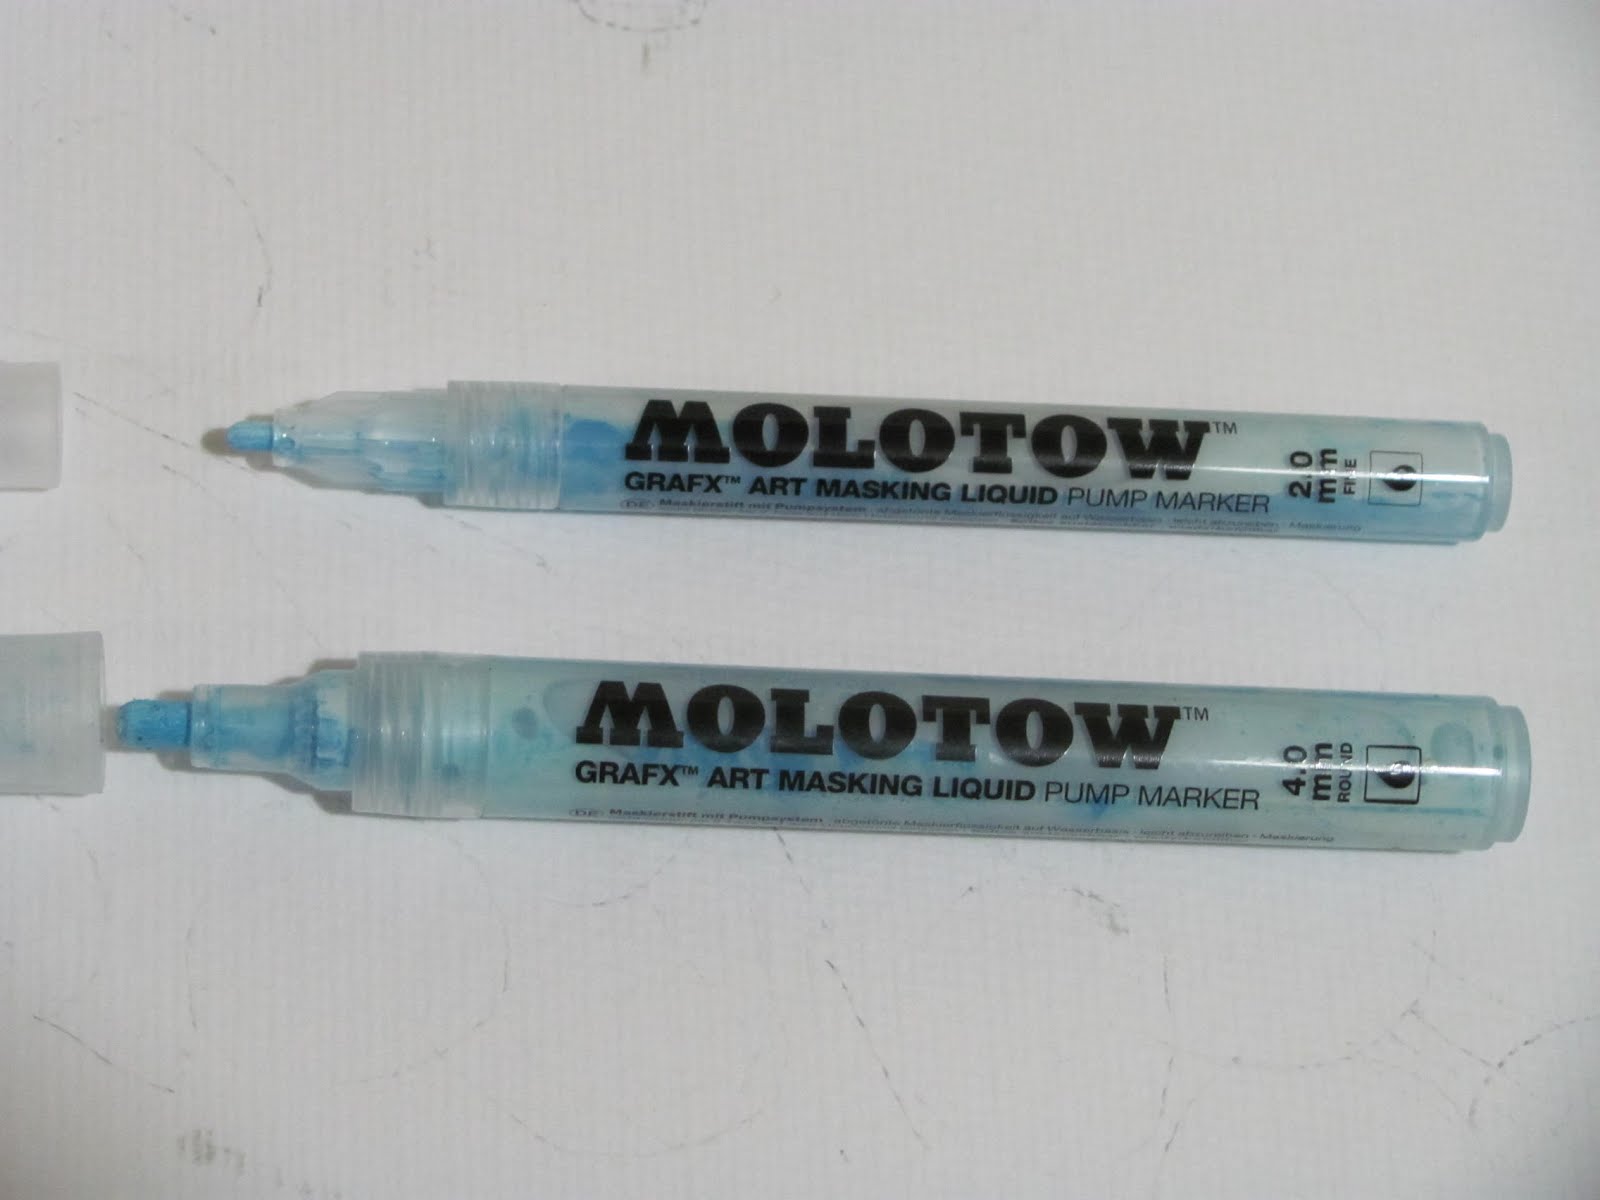 Molotow 2mm Masking Liquid Pen